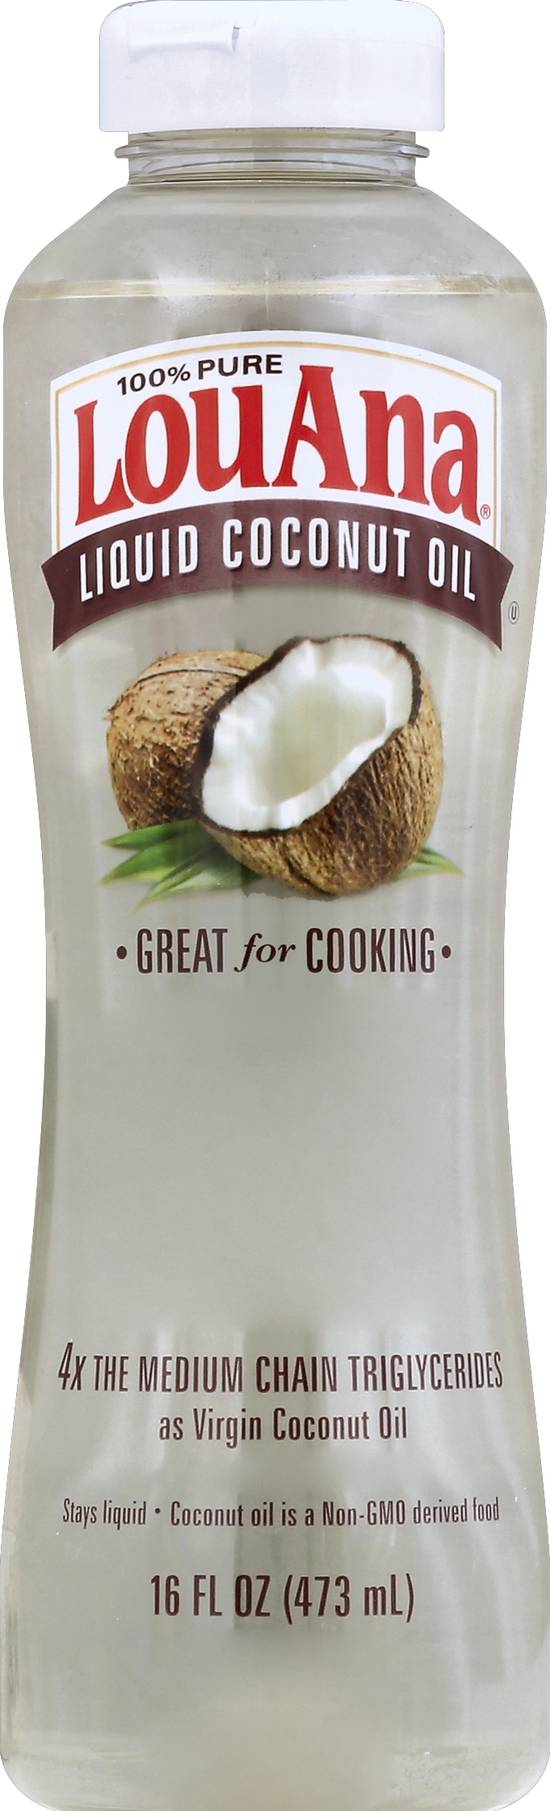 Louana 100% Pure Liquid Coconut Oil